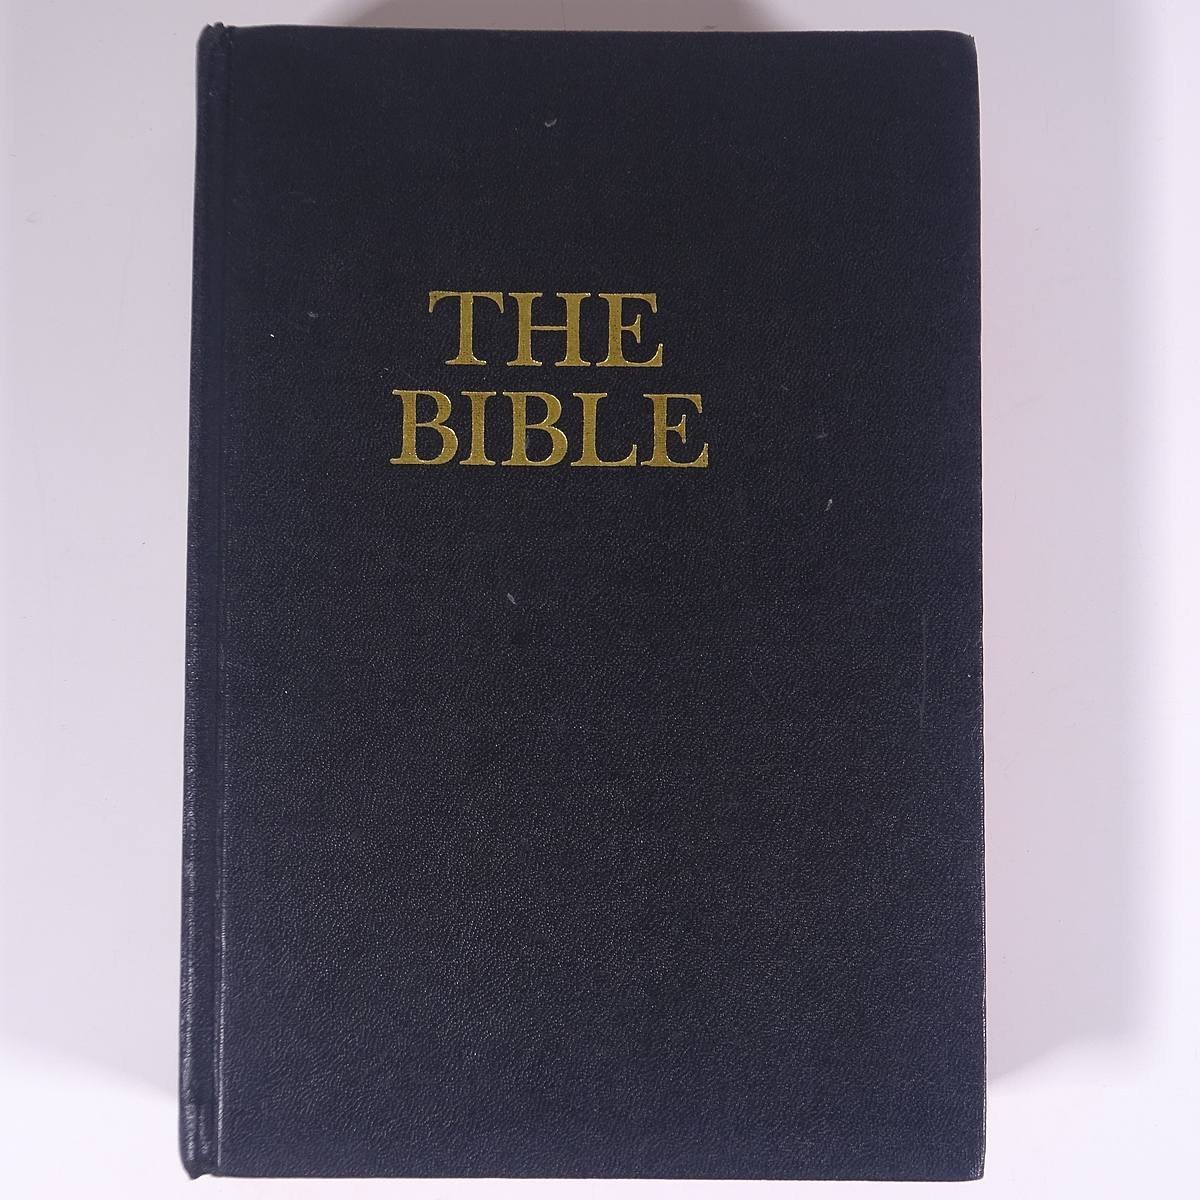 【英語洋書】 THE BIBLE 旧約聖書 新約聖書 REVISED STANDARD VERSION 改訂標準版 1971 単行本 キリスト教 聖書_画像1